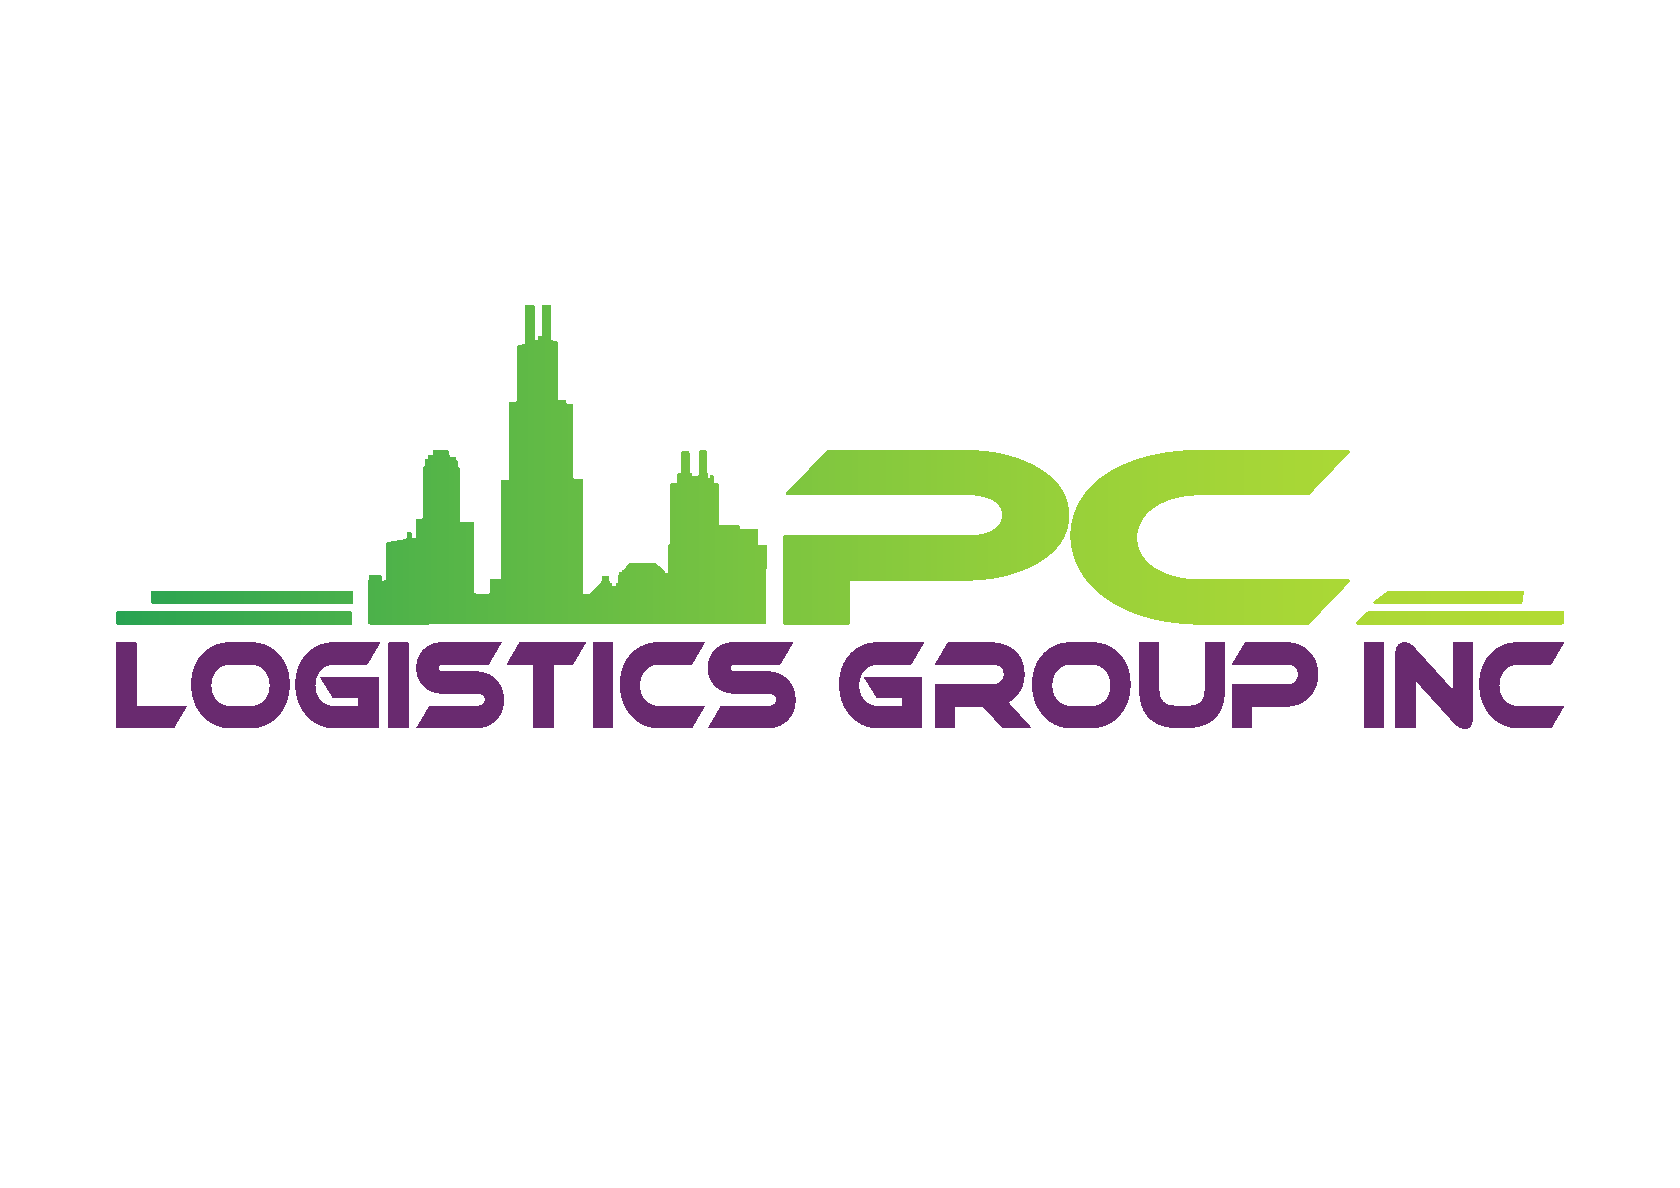 PC Logistics Group Inc